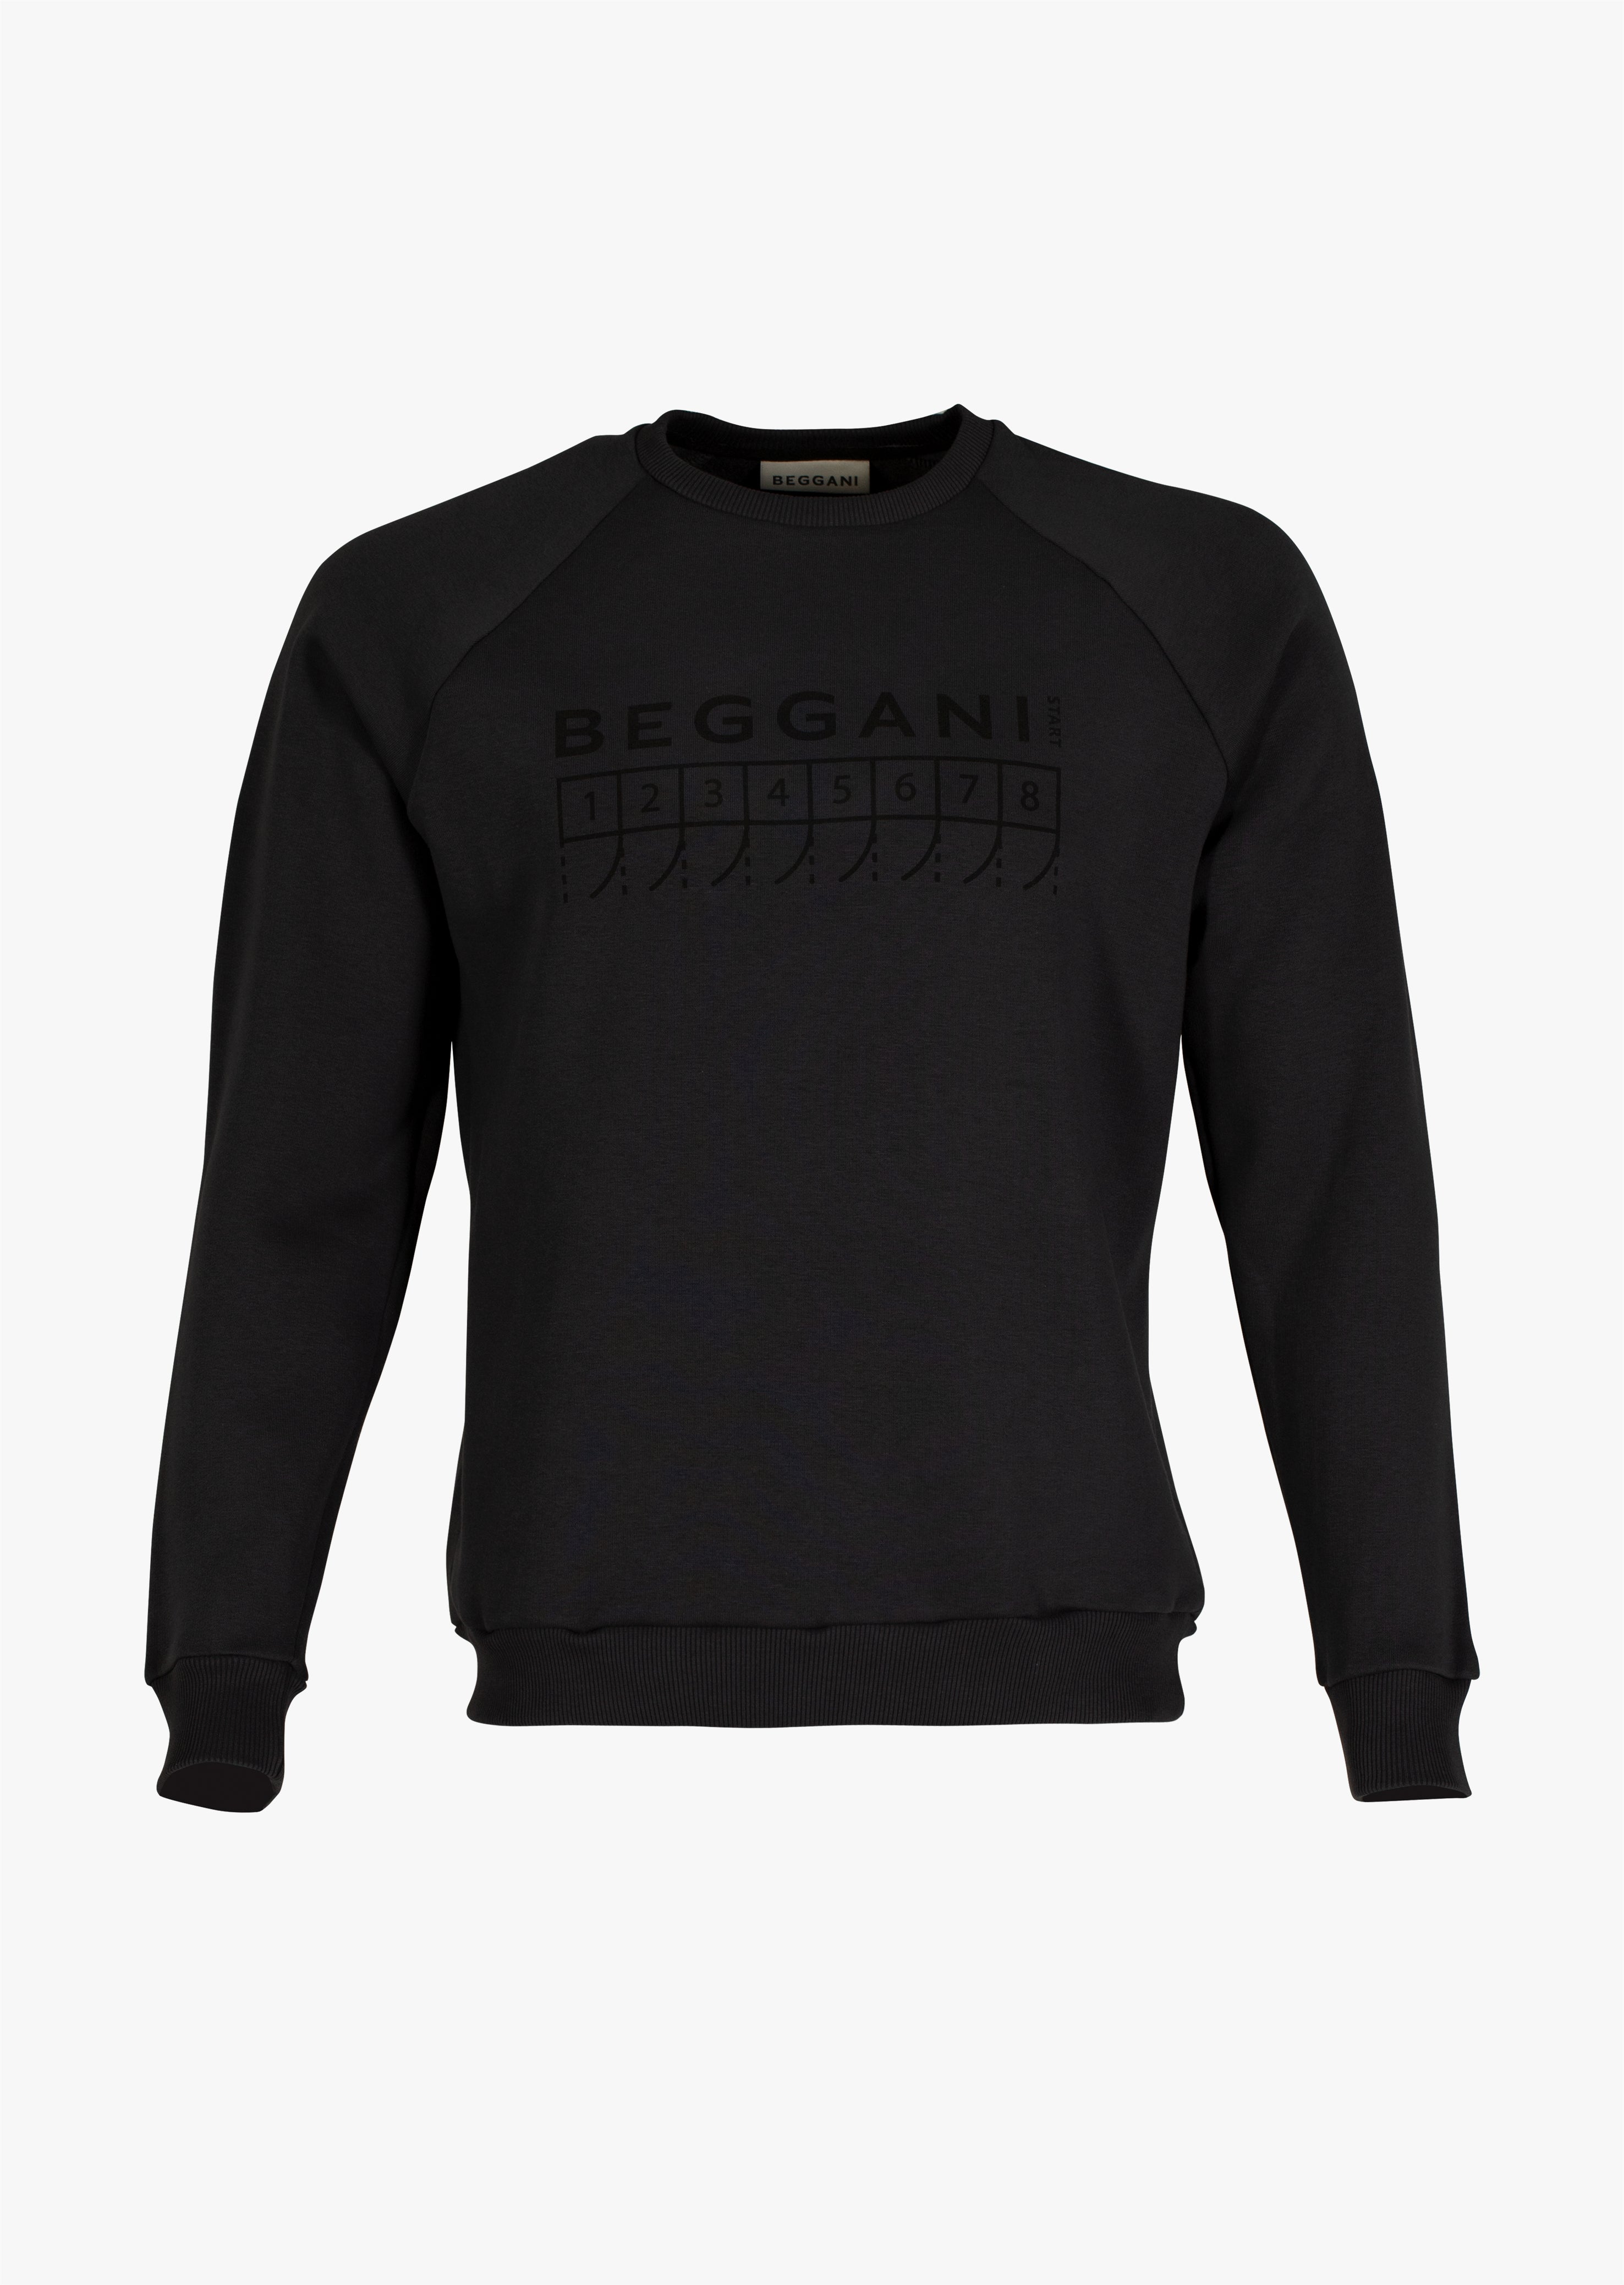 BEGGANI starting sweatshirt